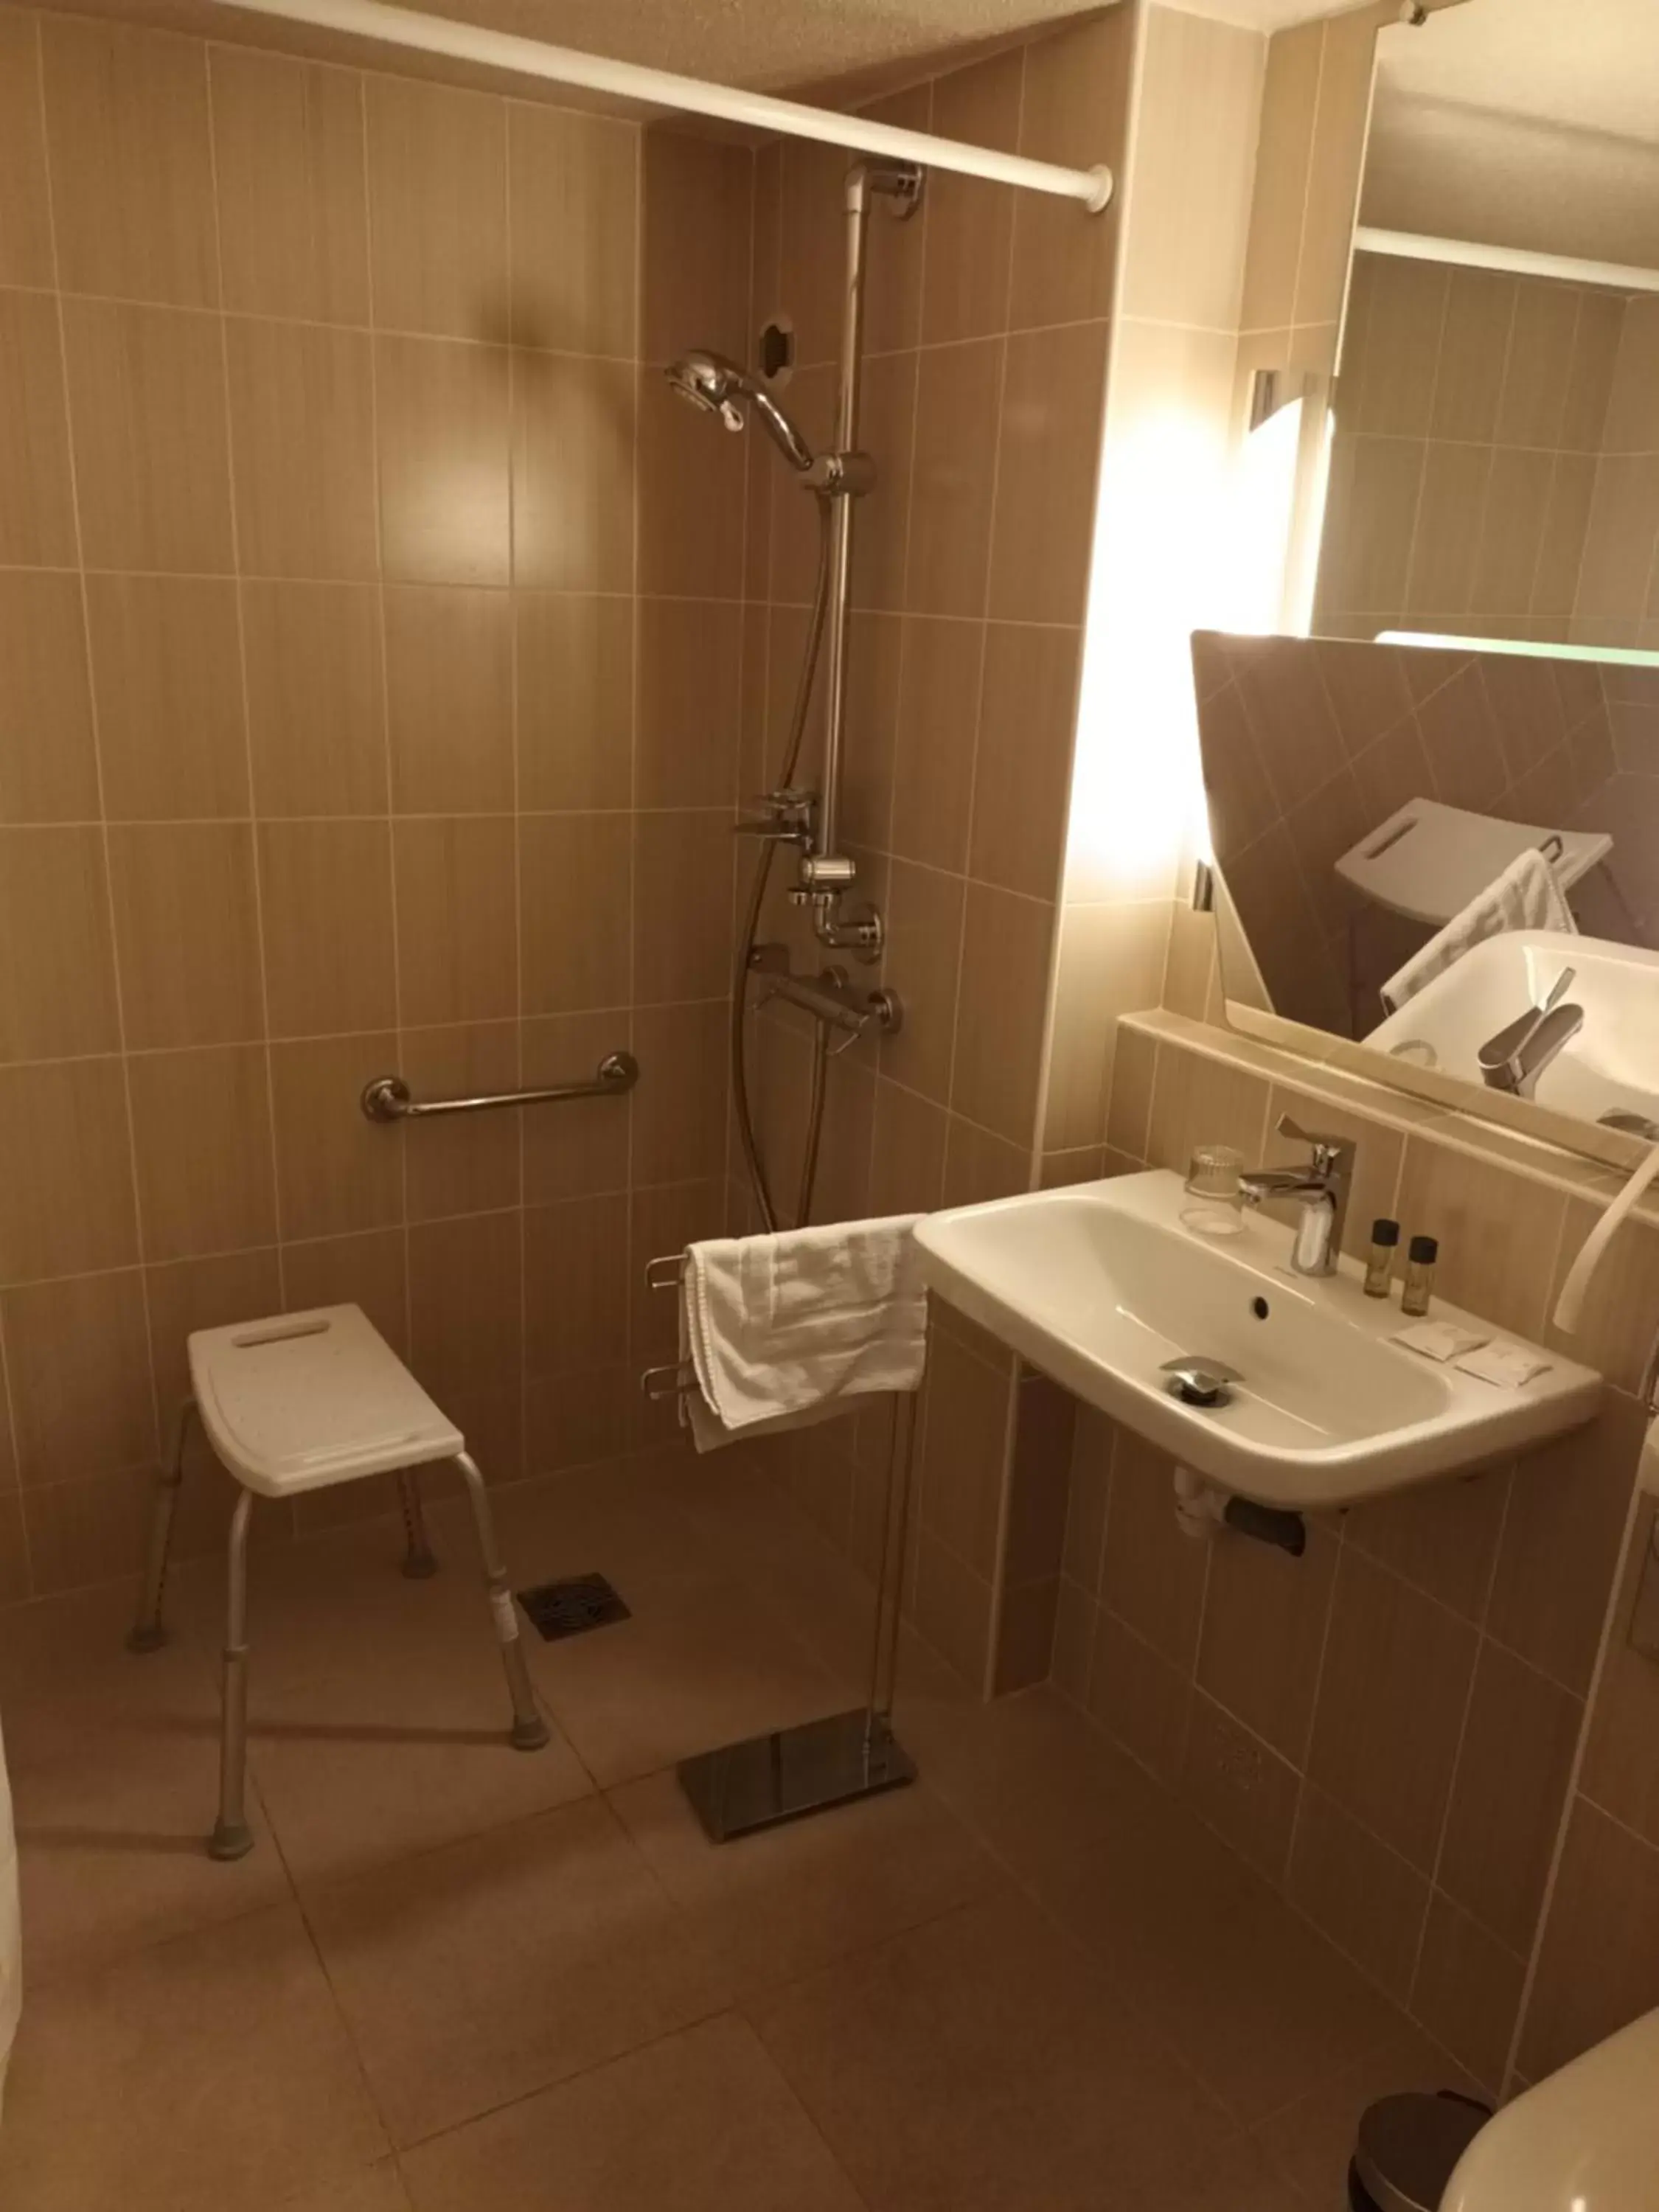 Facility for disabled guests, Bathroom in Hôtel des Arcades de Cachan - Grand Paris Sud